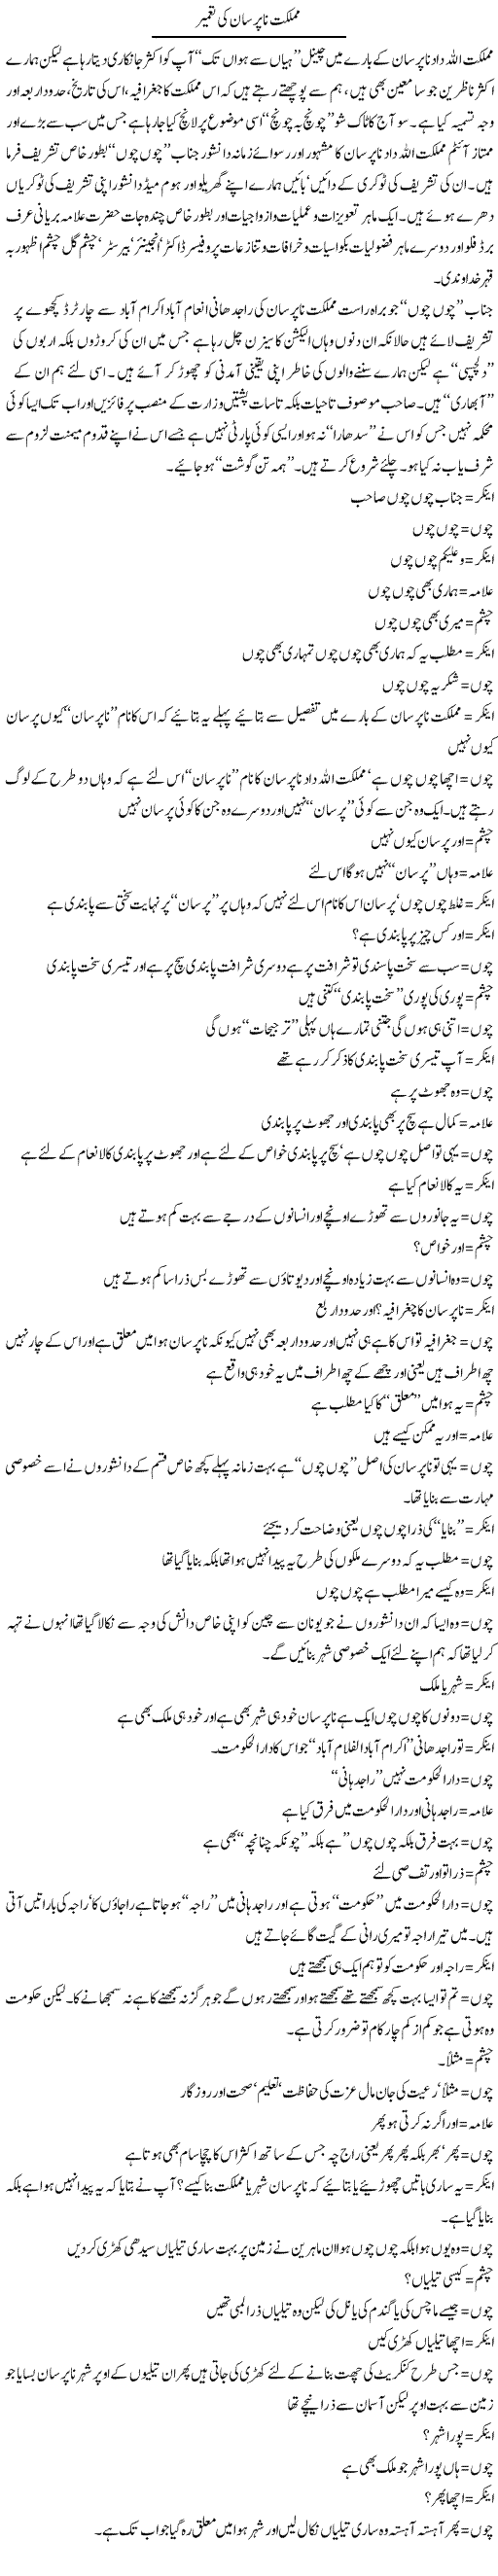 Mumlikat Napursan Ki Tameer | Saad Ullah Jan Barq | Daily Urdu Columns